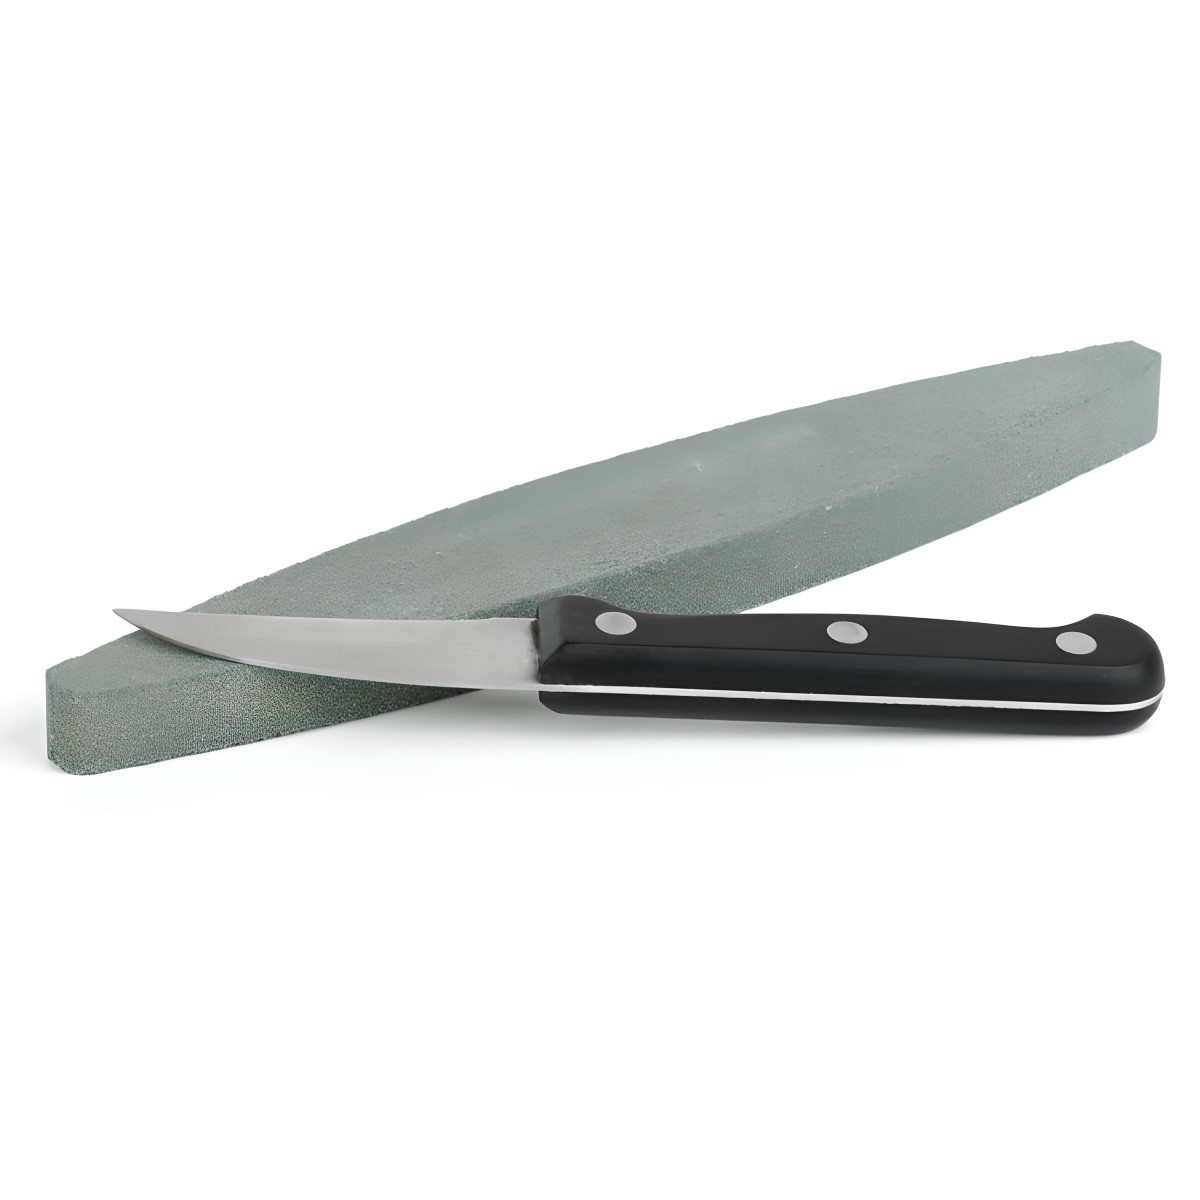 Kamen za oštrenje noževa, kosa i drugih noža - – Garden Seeds Market |  Besplatna dostava